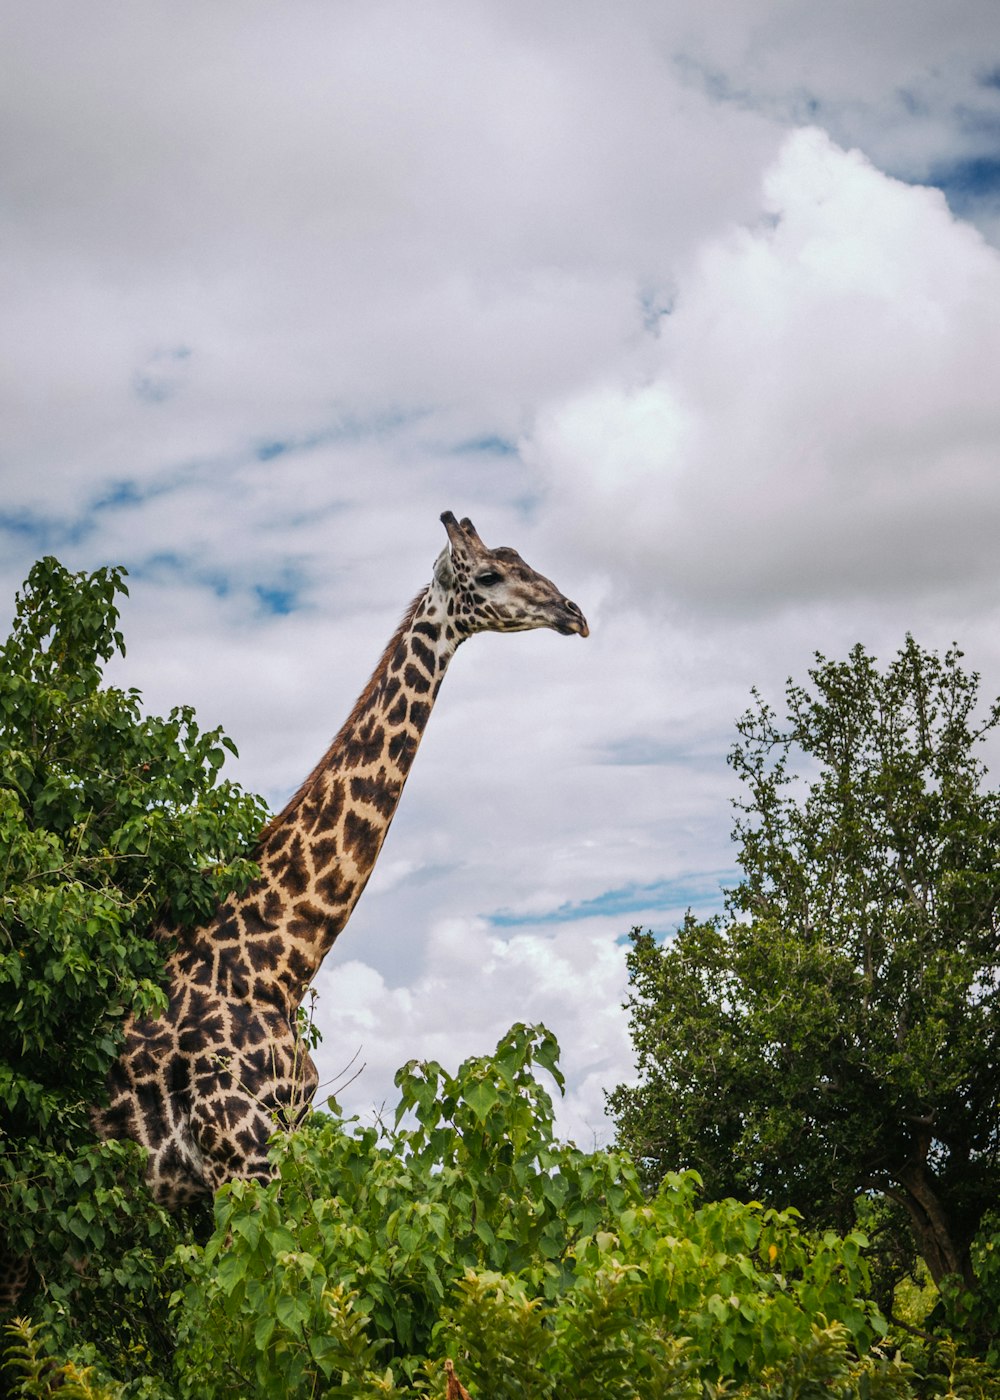 giraffe surround with trees